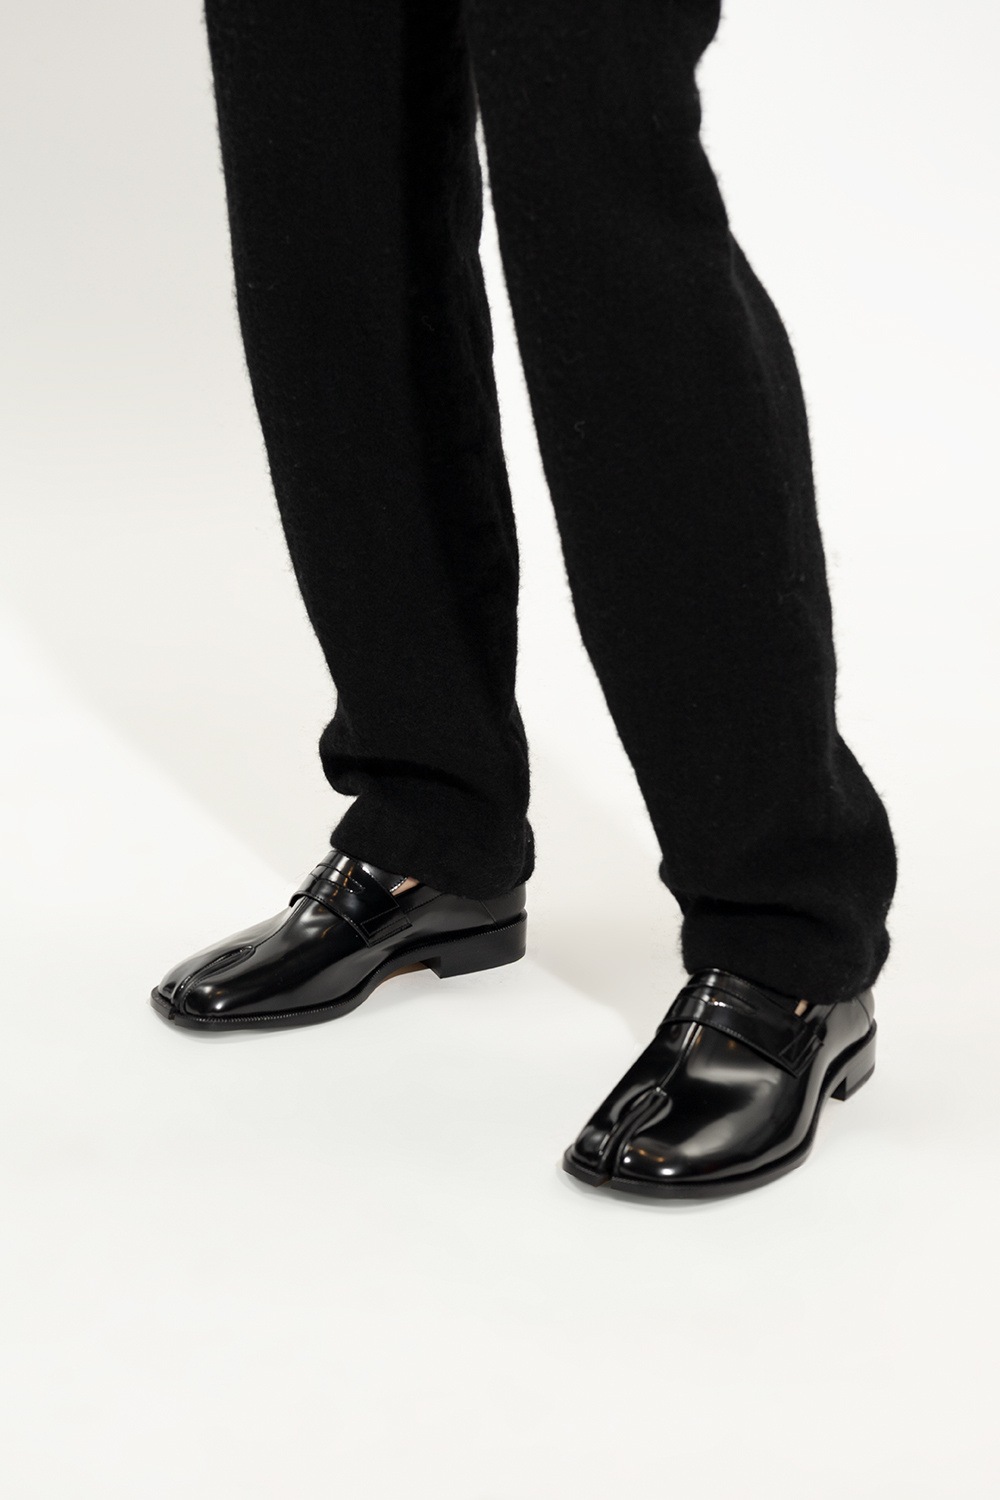 Black 'Tabi' split-toe shoes Maison Margiela - Vitkac Canada